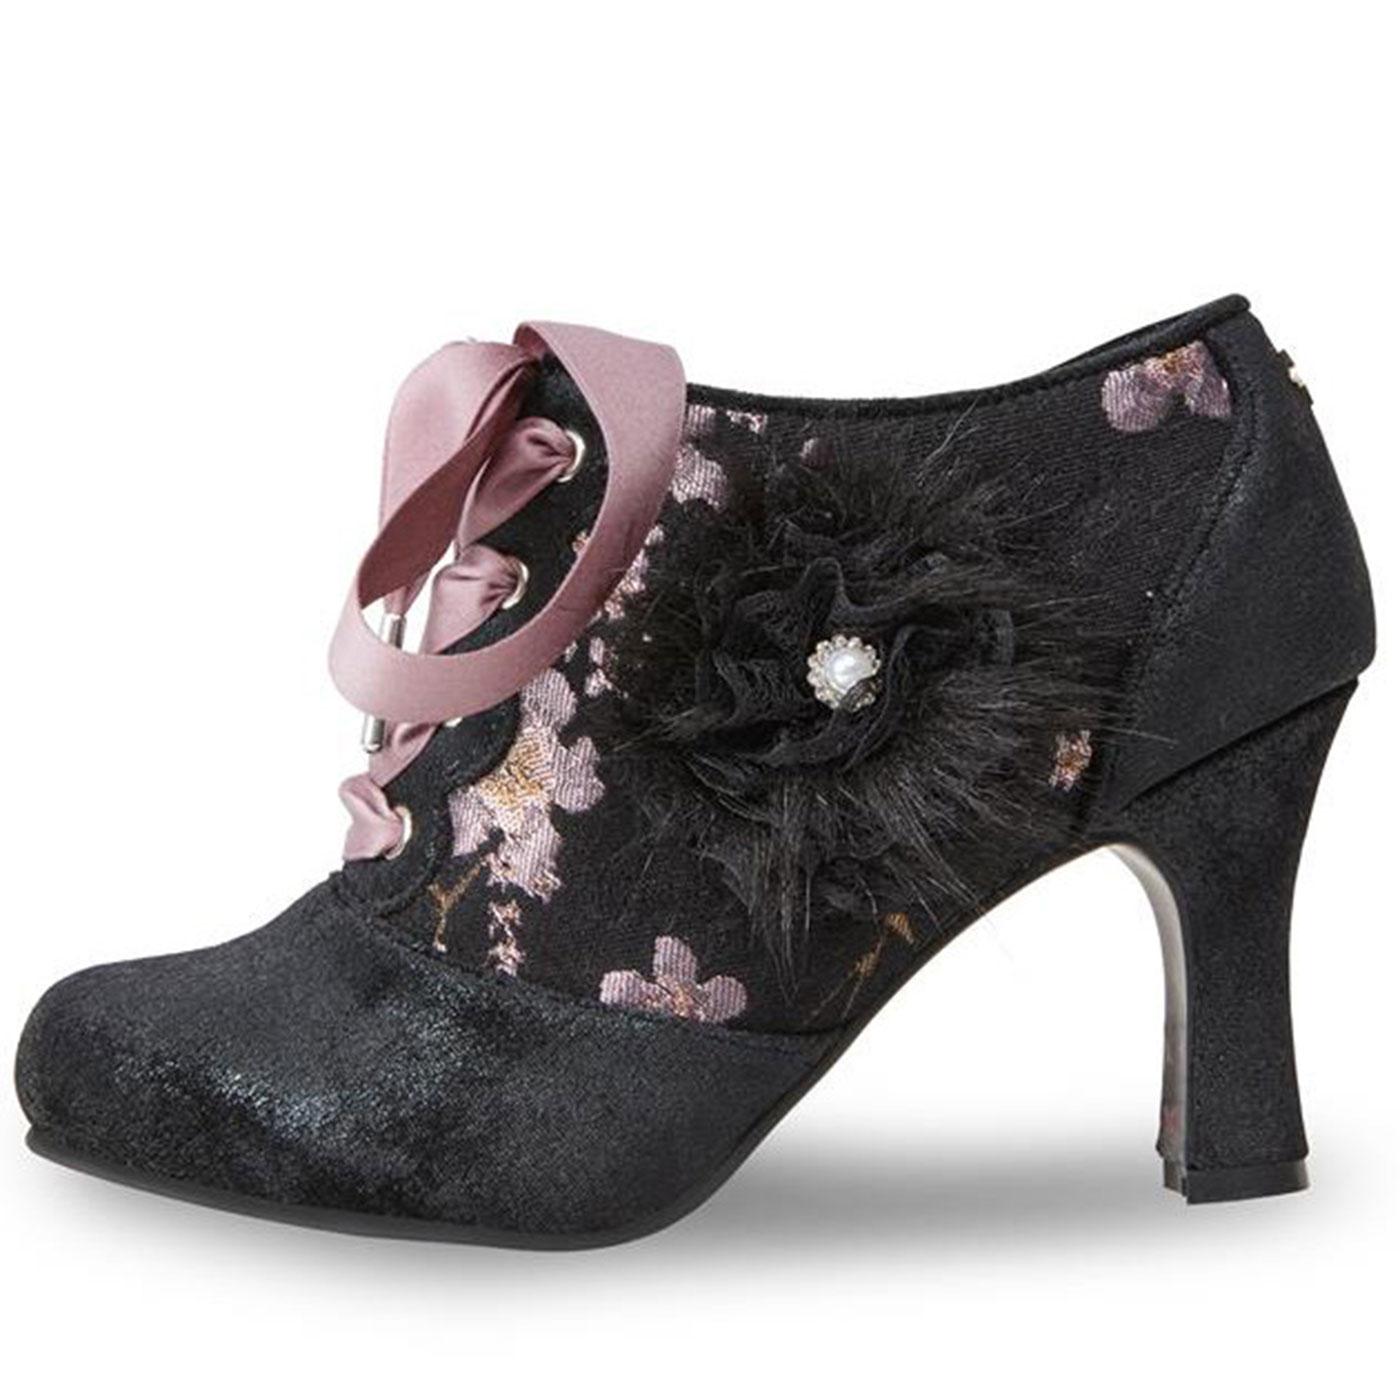 JOE BROWNS Hermoine Vintage Floral Shoe 